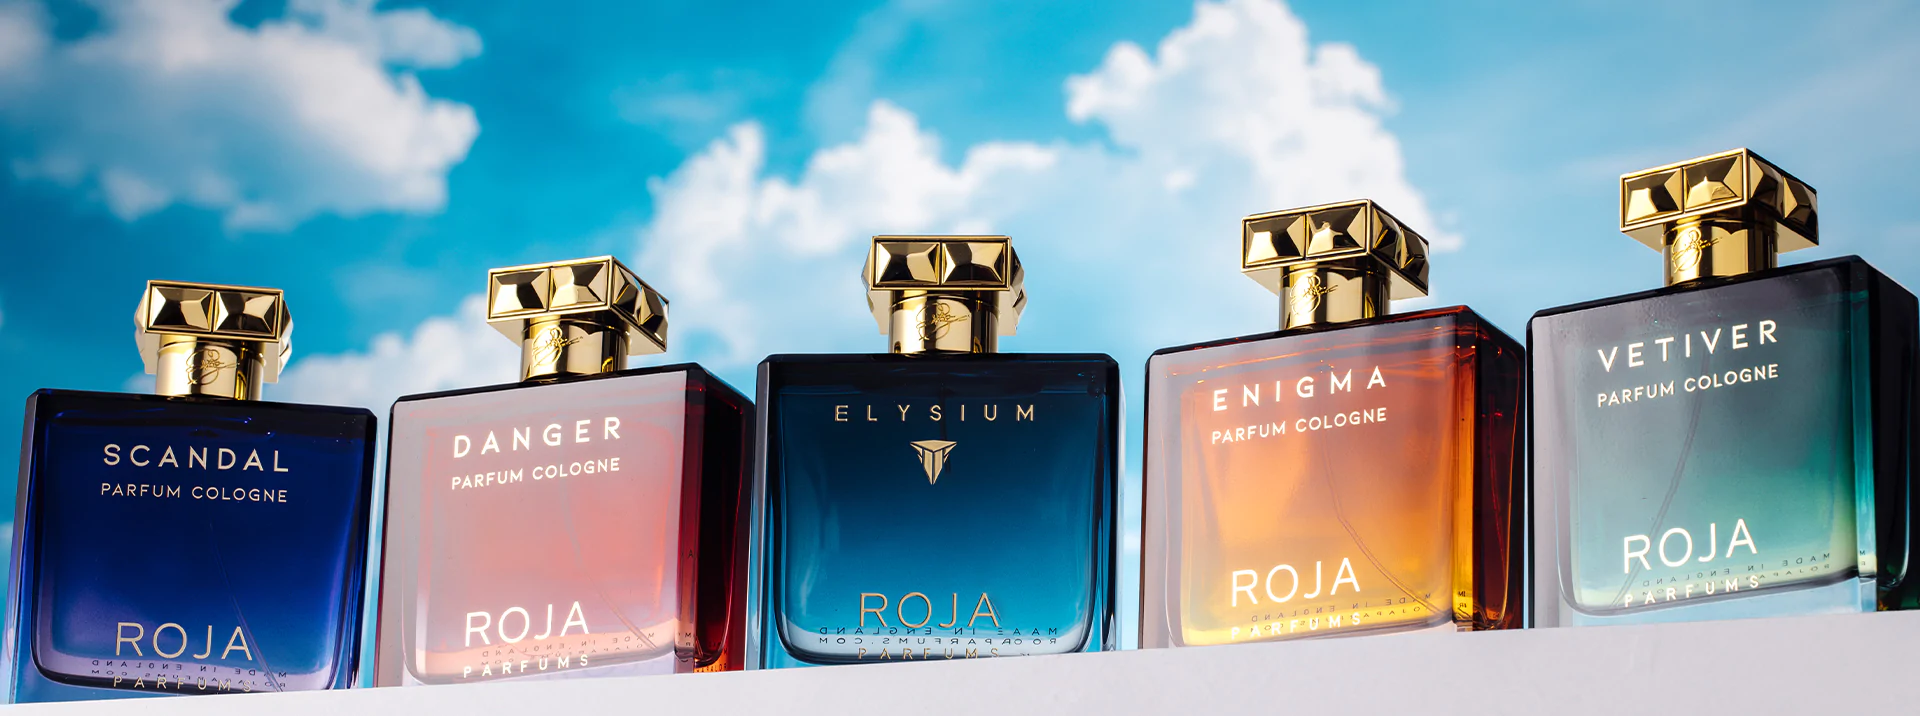 Elysium Parfum Cologne - ROJA